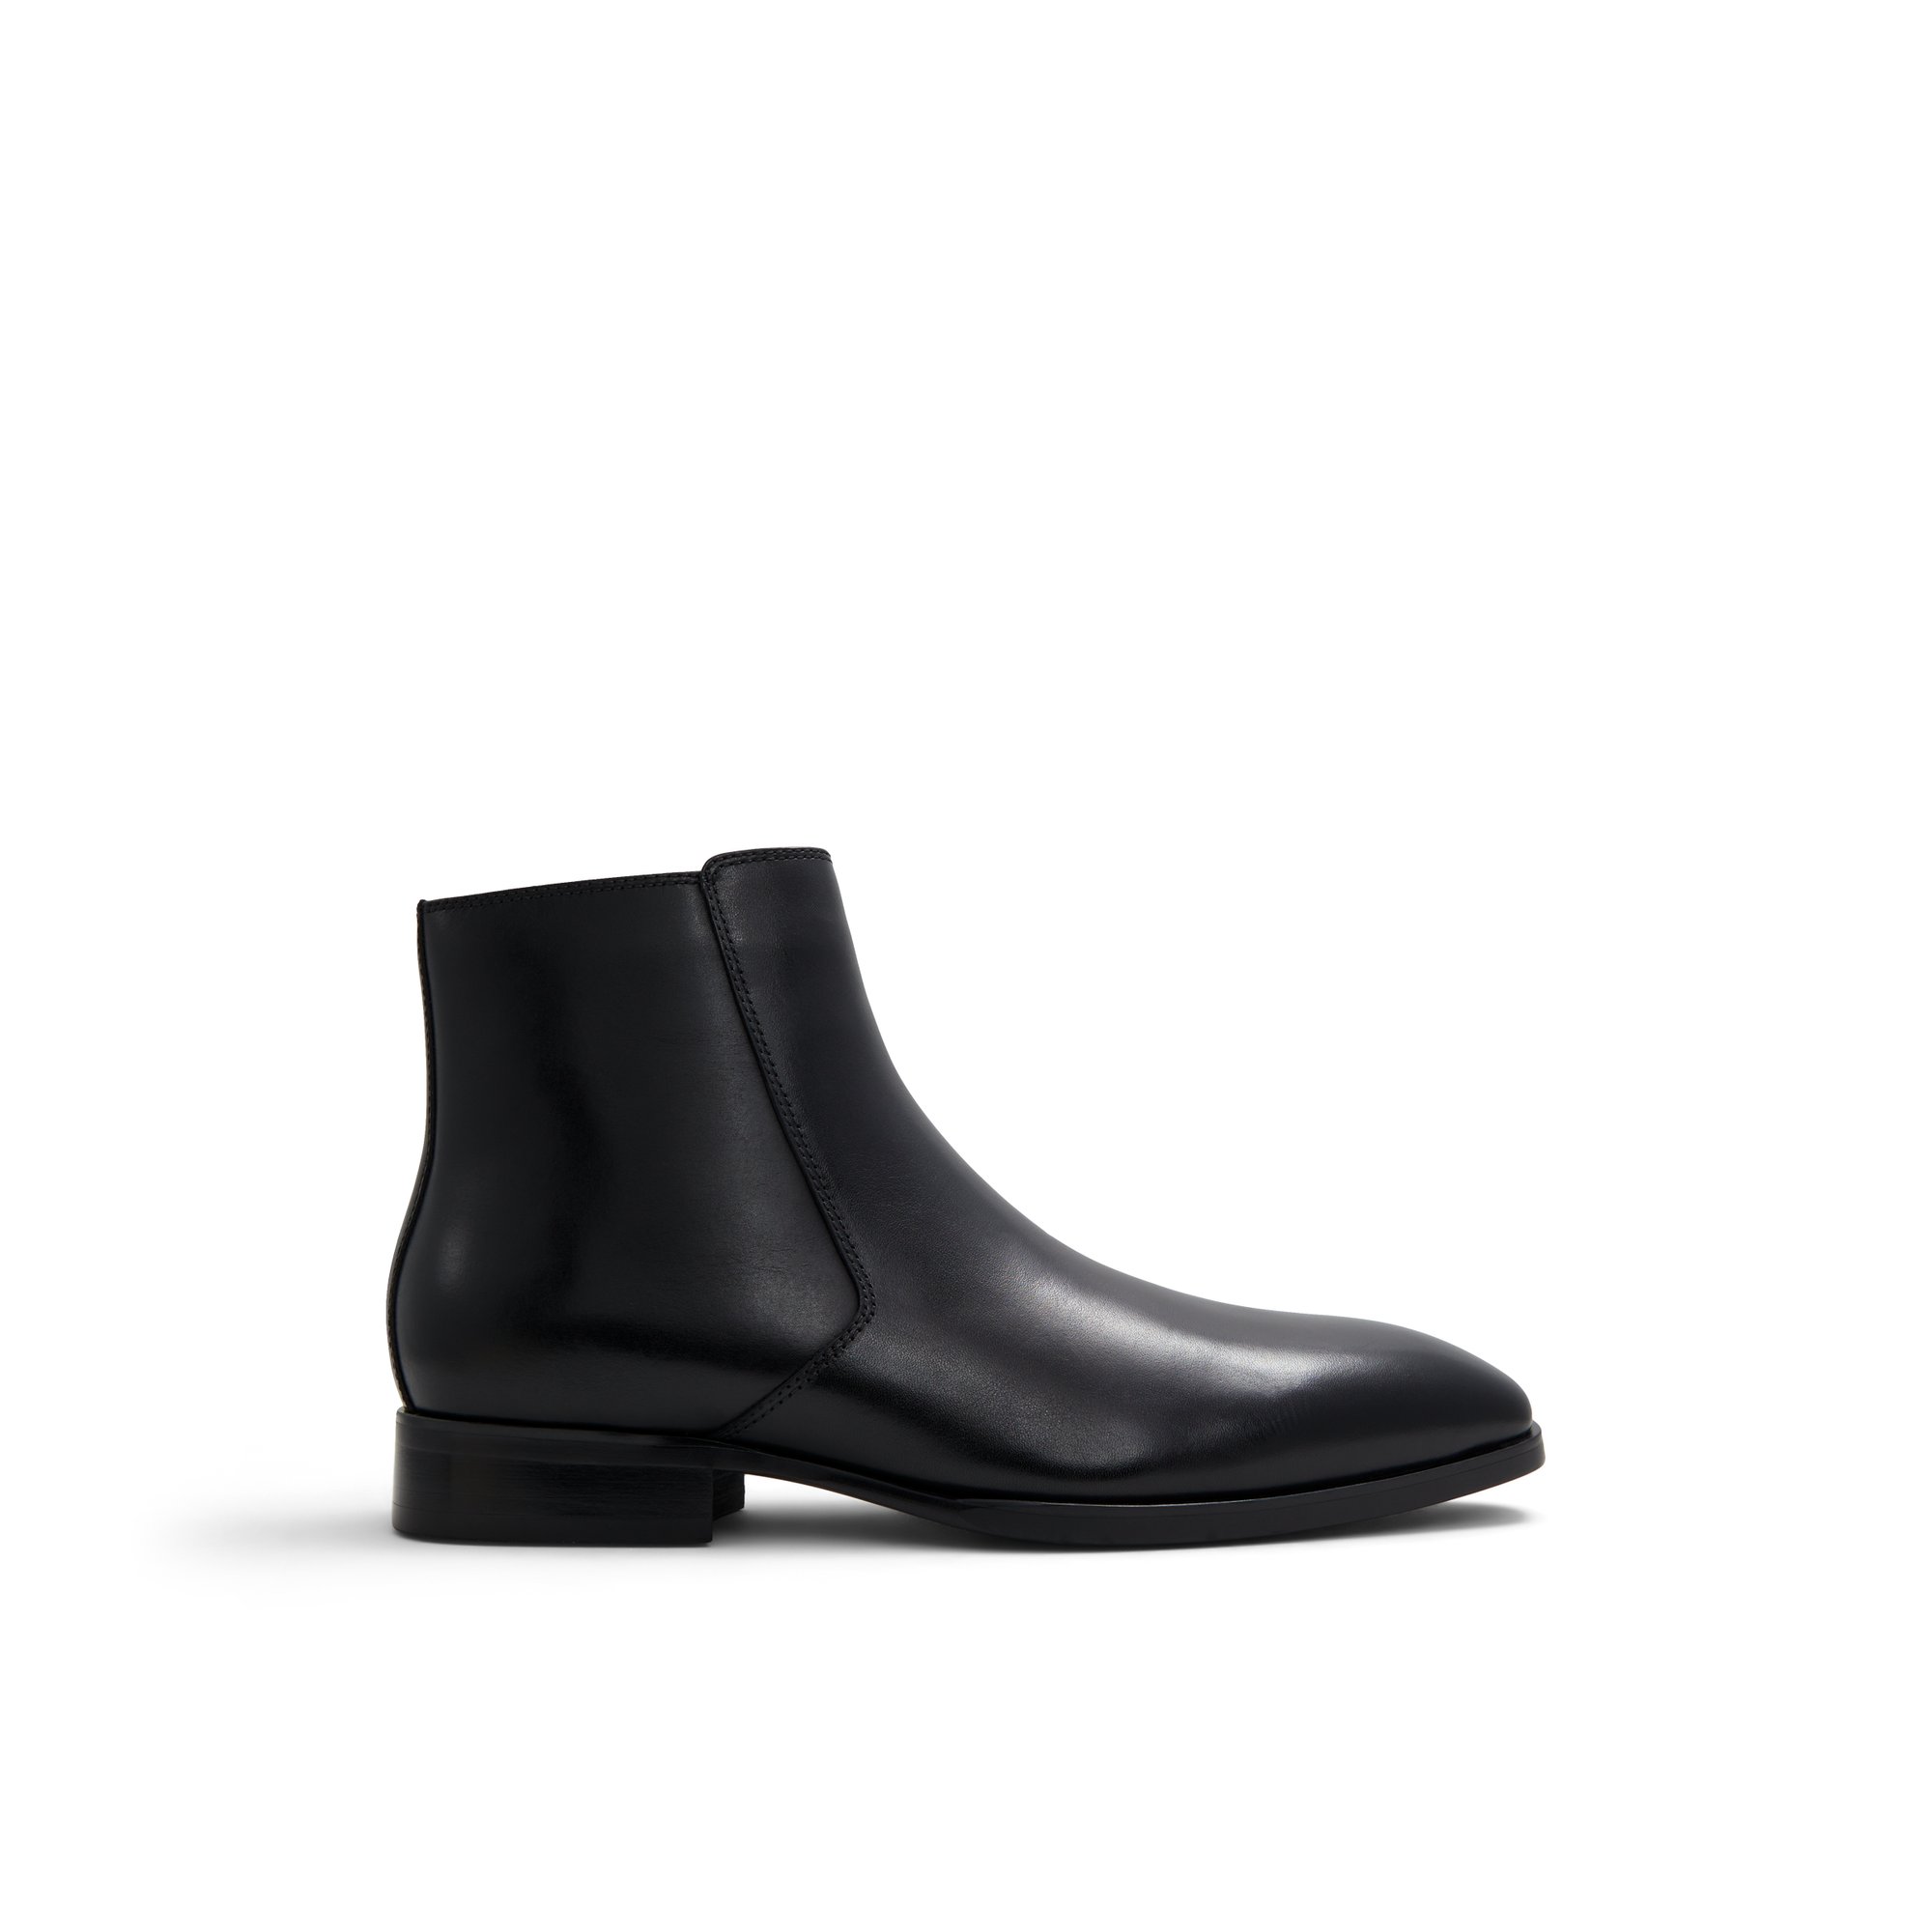 ALDO Rosso - Men's Boots - Black